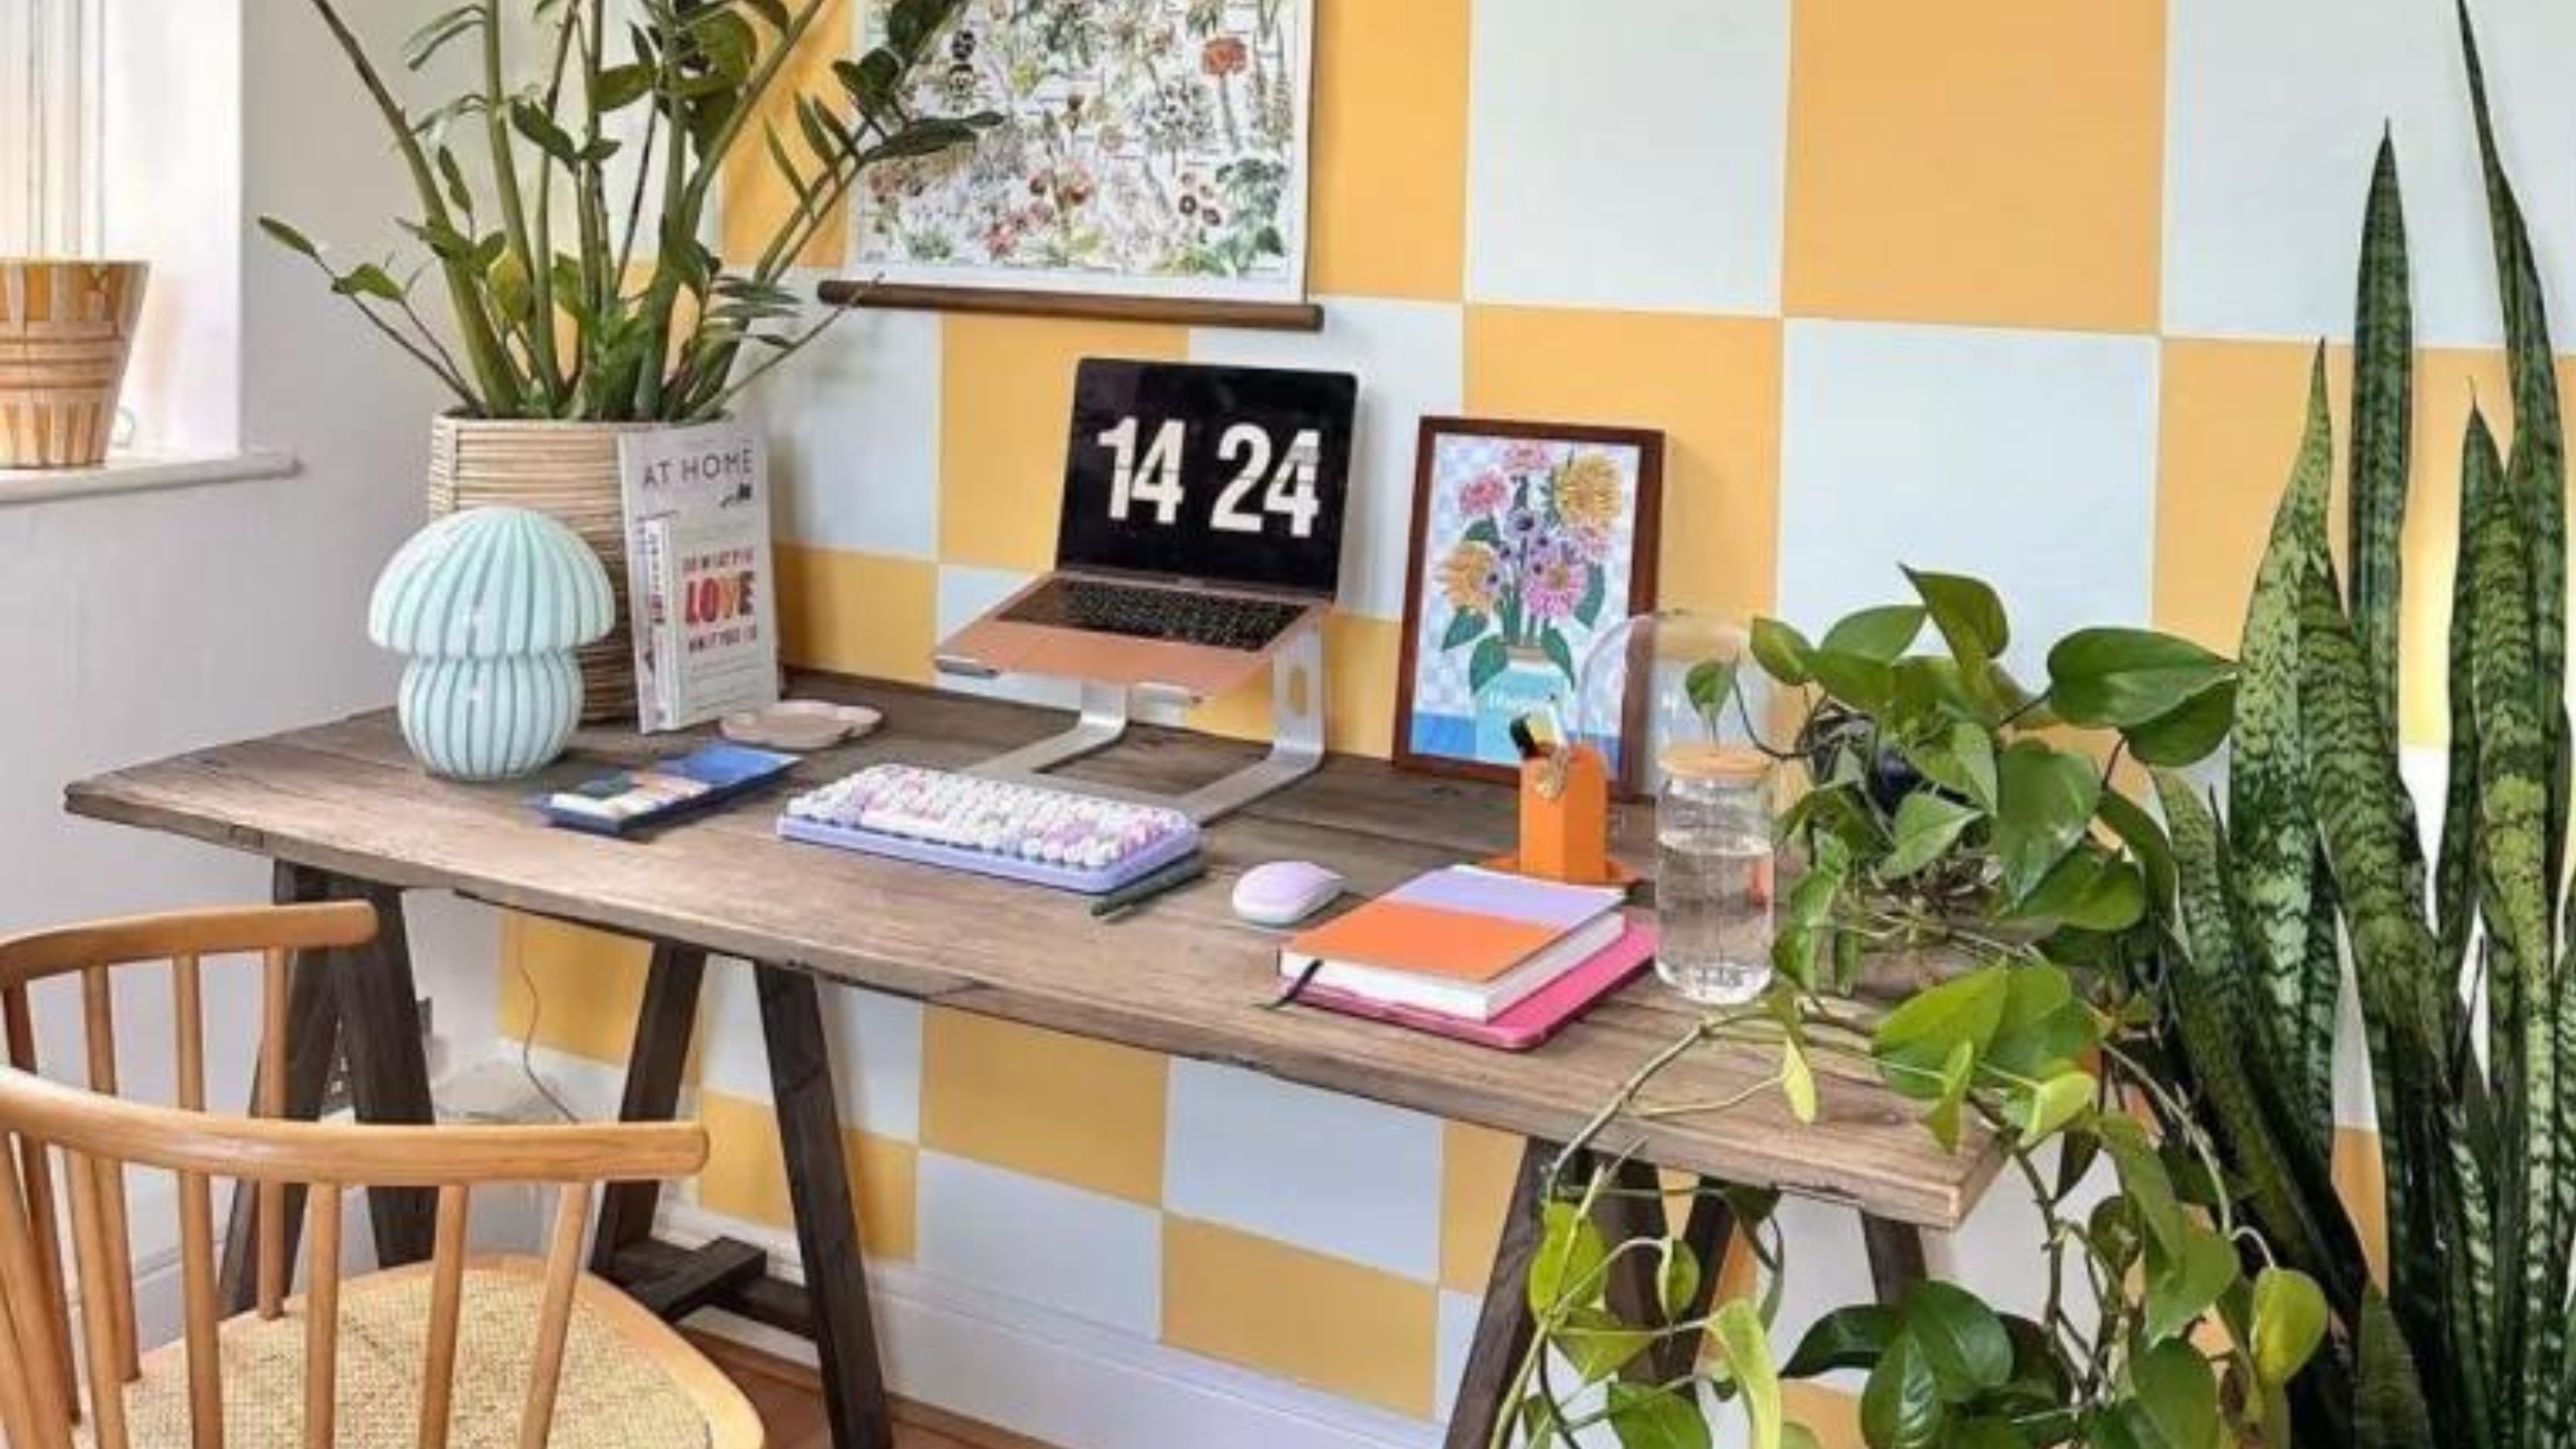 simple home office desk study bedroom